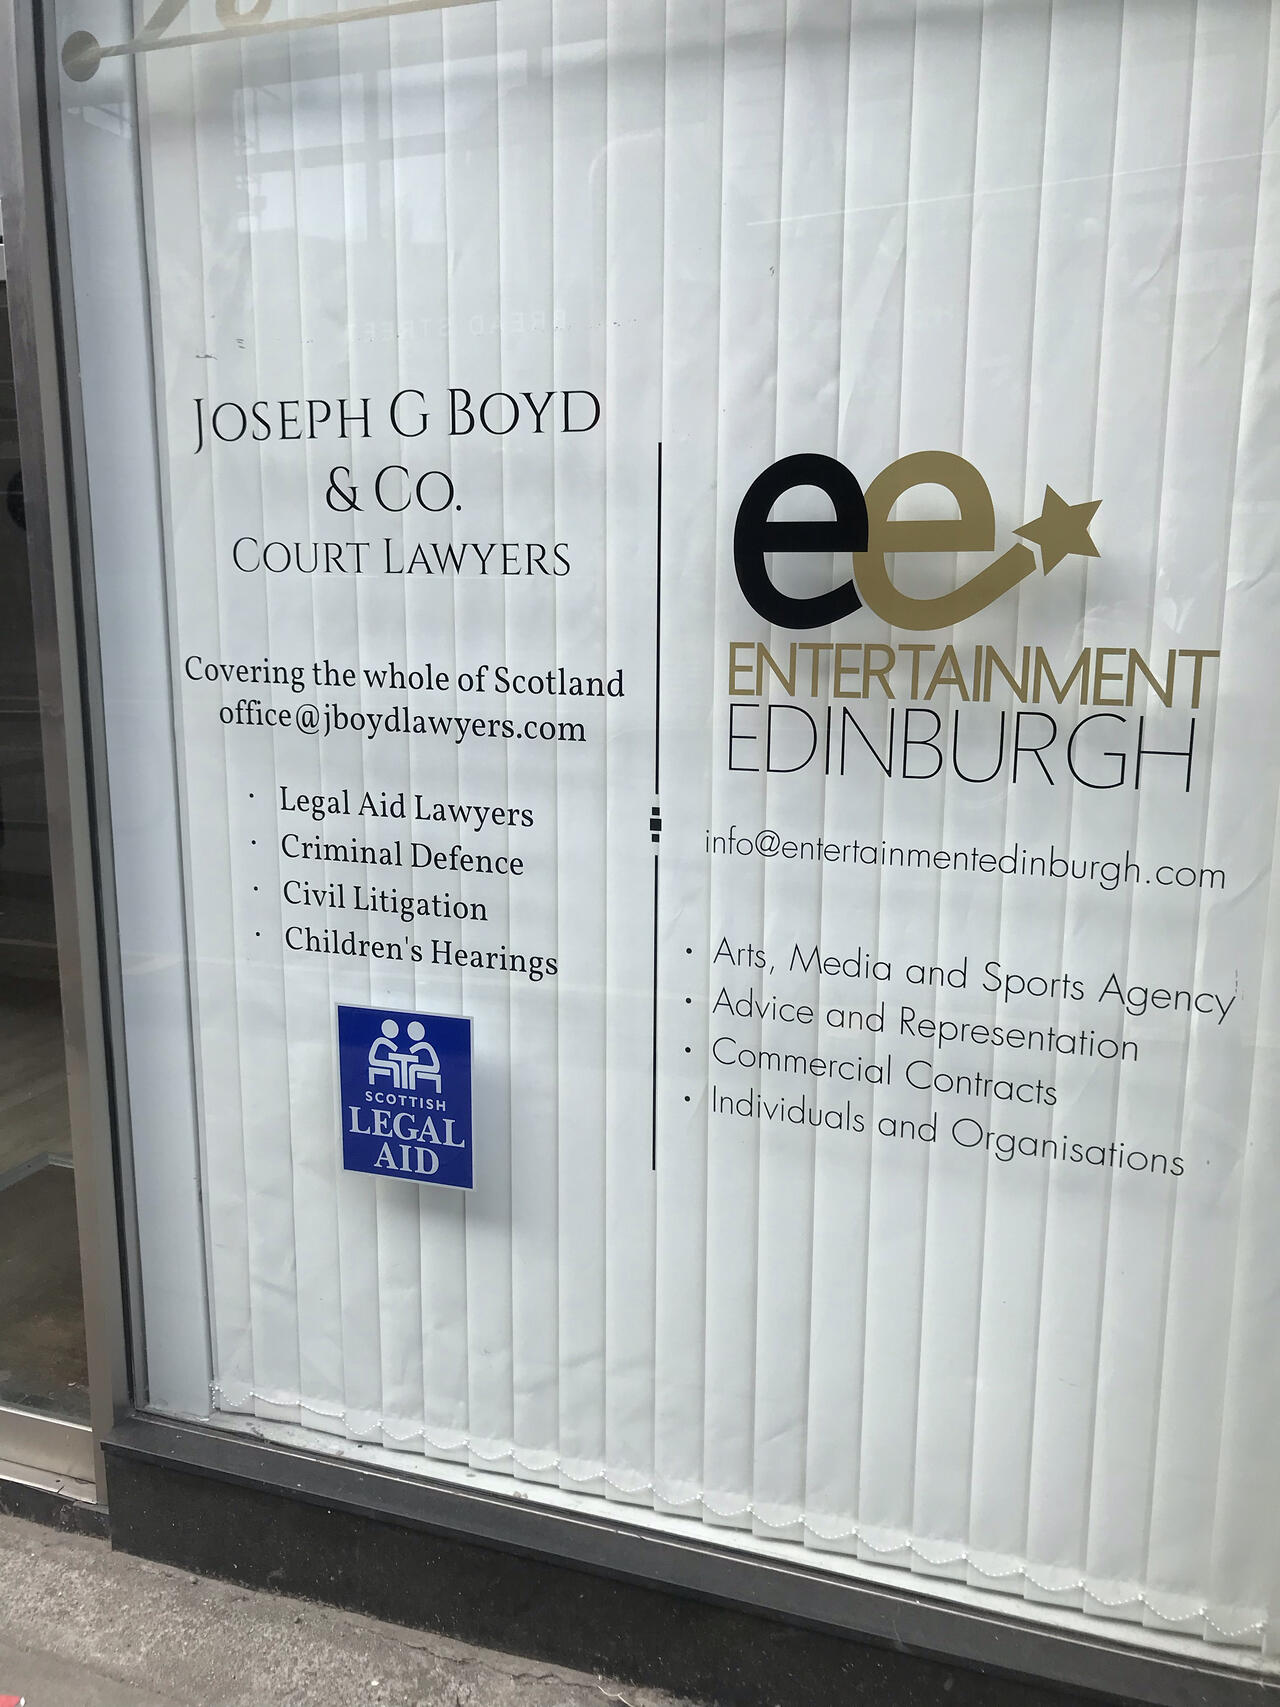 New office for Edinburgh firm Joseph G Boyd & Co